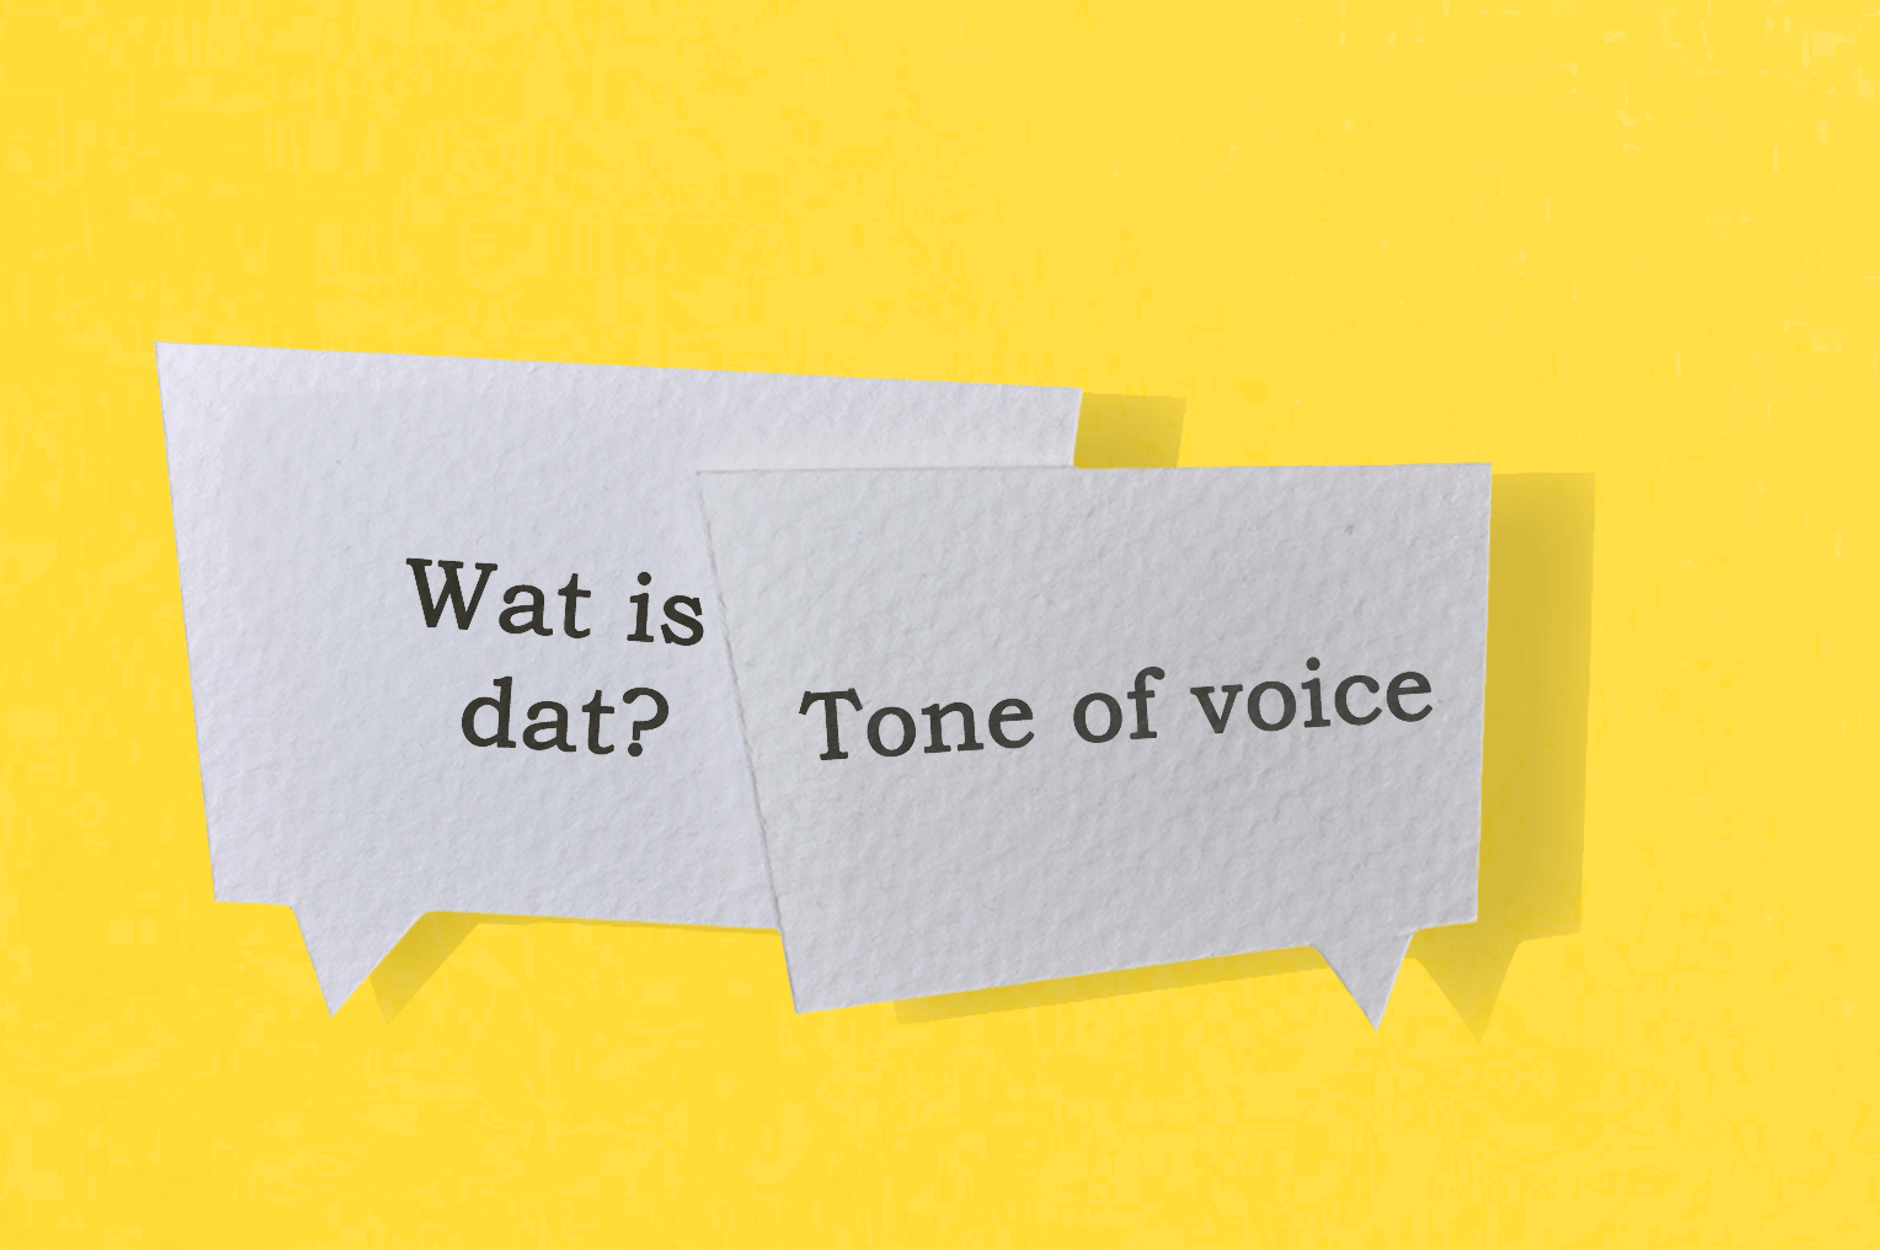 Wat is tone of voice?